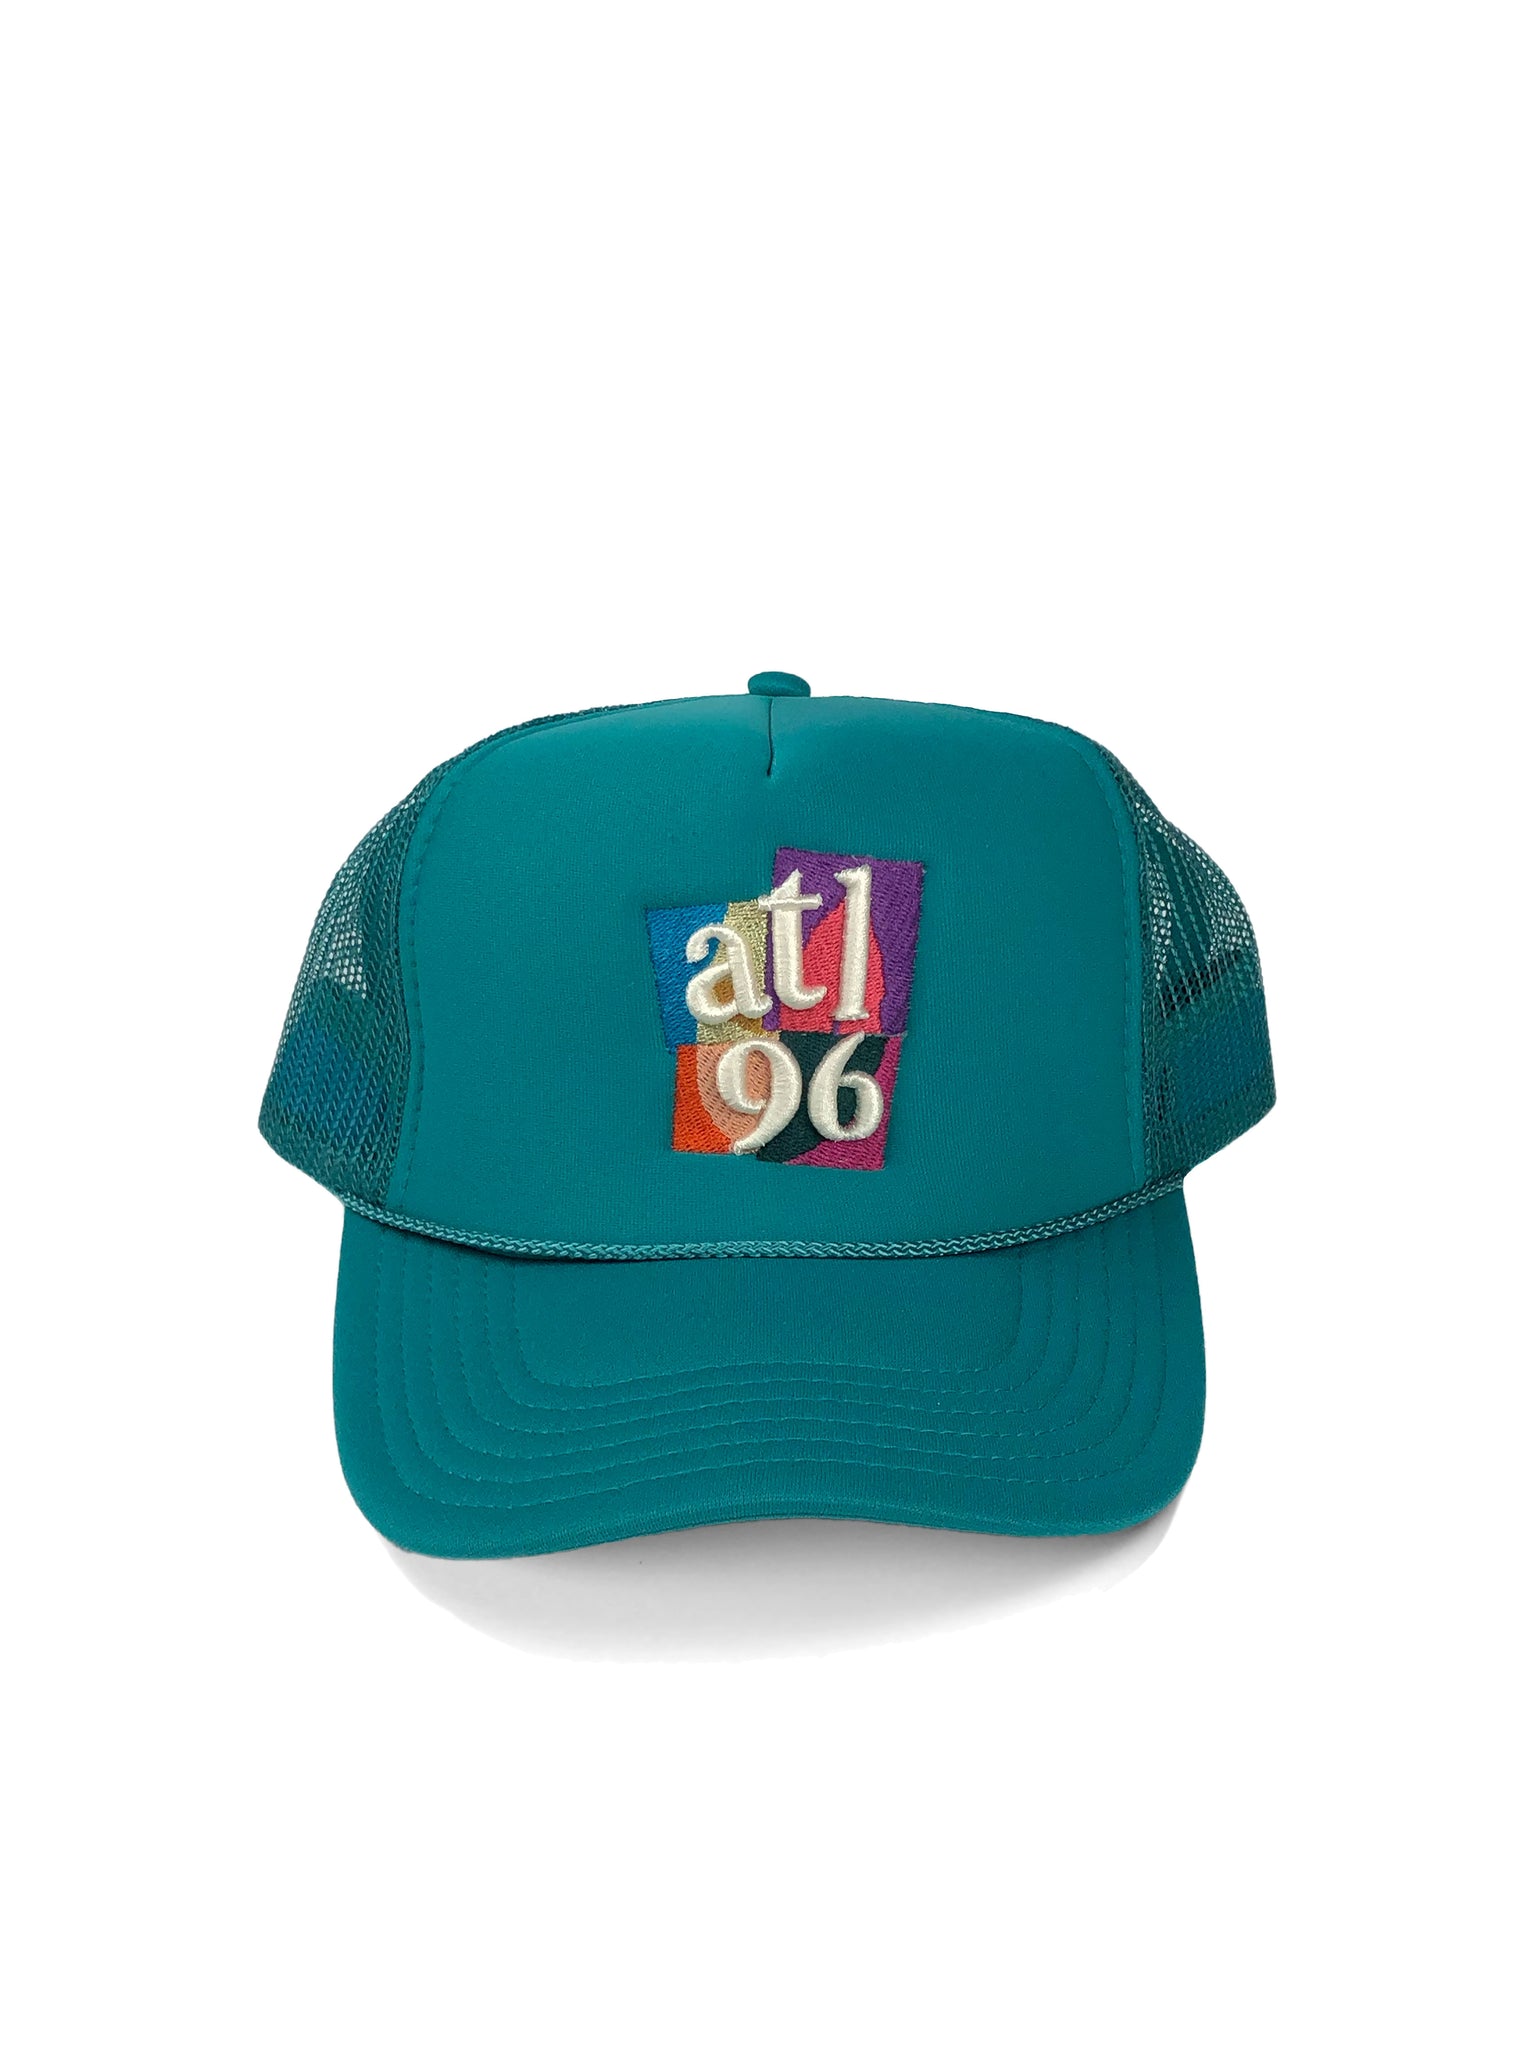 atl1996 Stacked ‘96 'Summer Daze' Trucker Hat